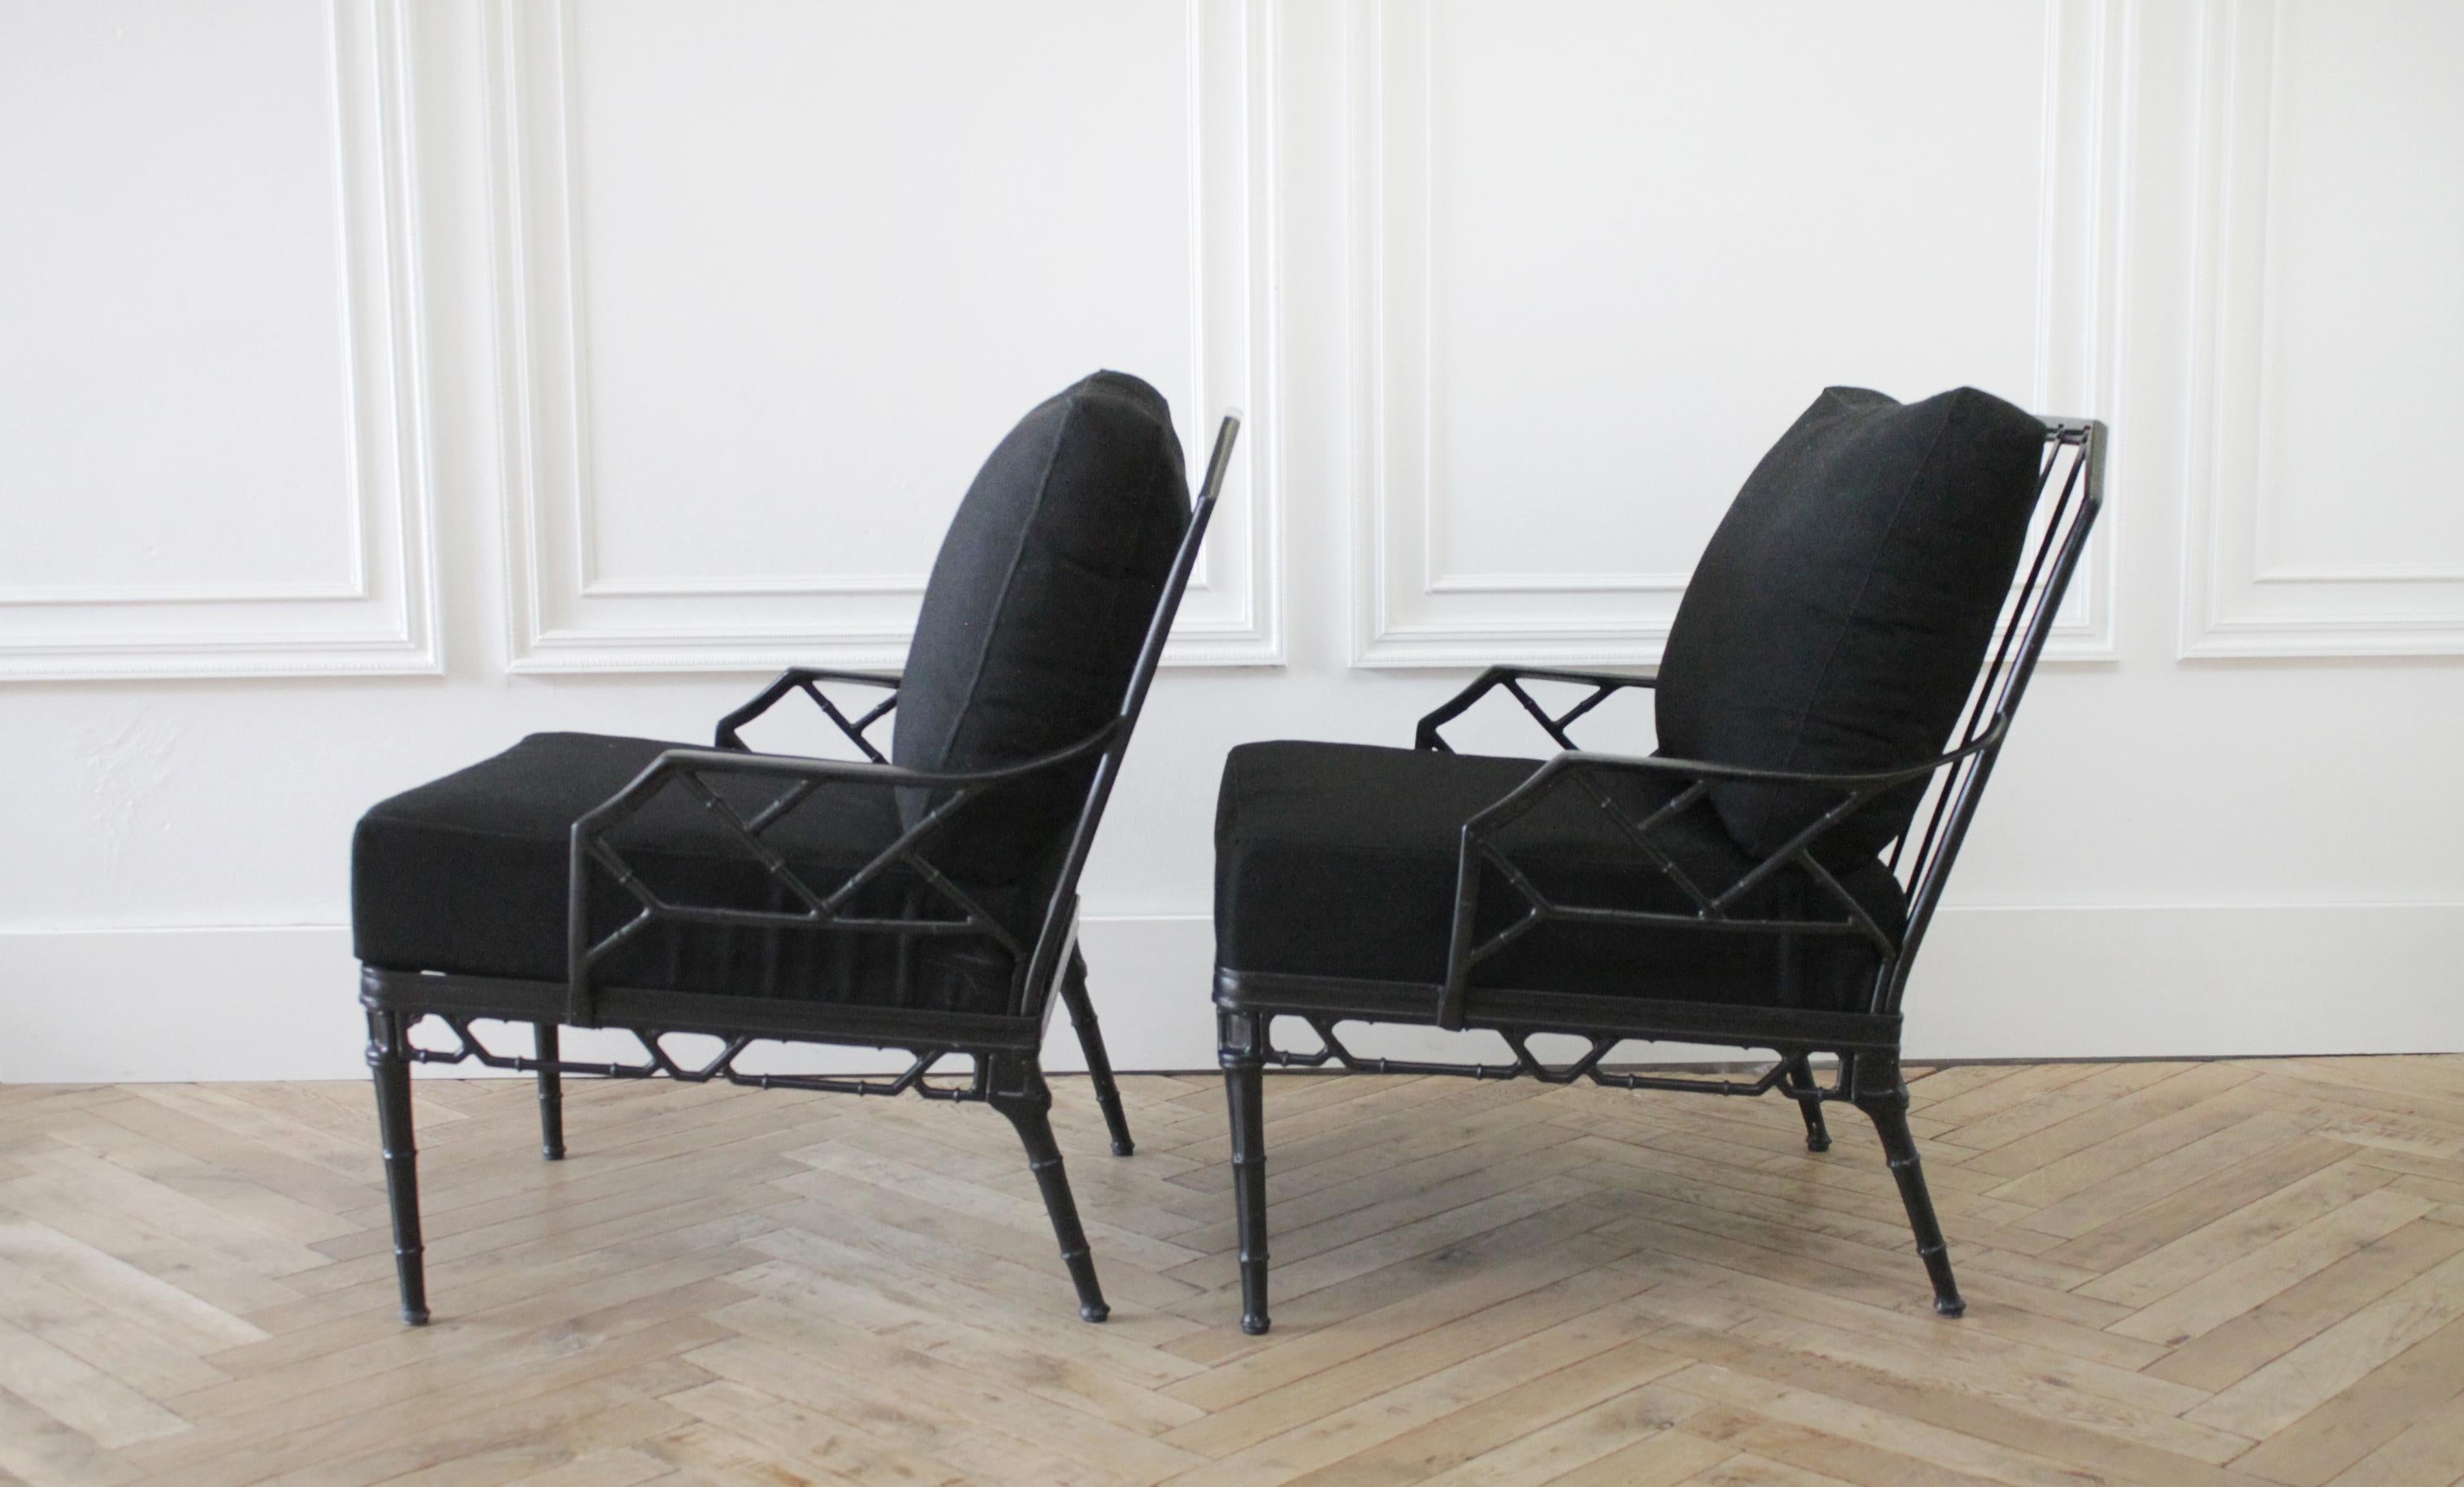 Vintage brown Jordan Calcutta pair of lounge chairs with Black Sunbrella cushions.
Measures:
28